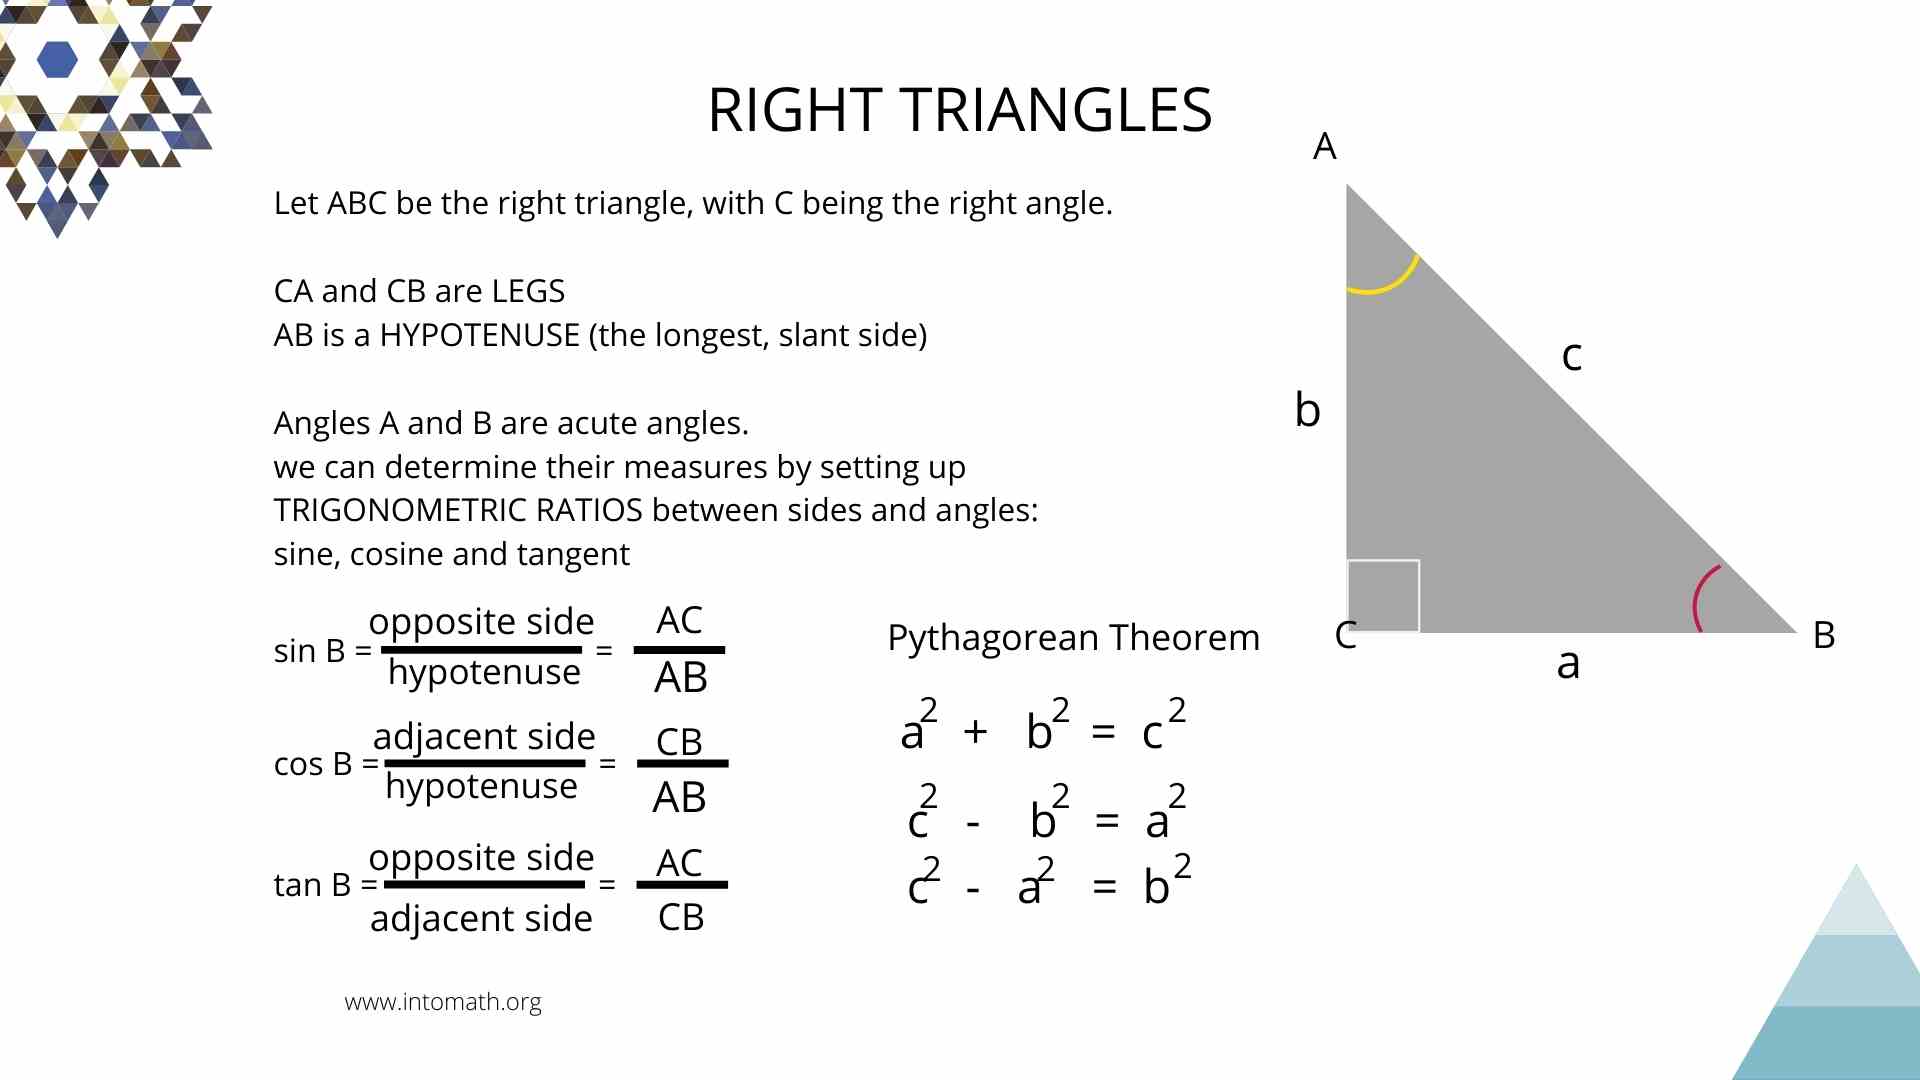 pythagorean-theorem-practice-worksheet